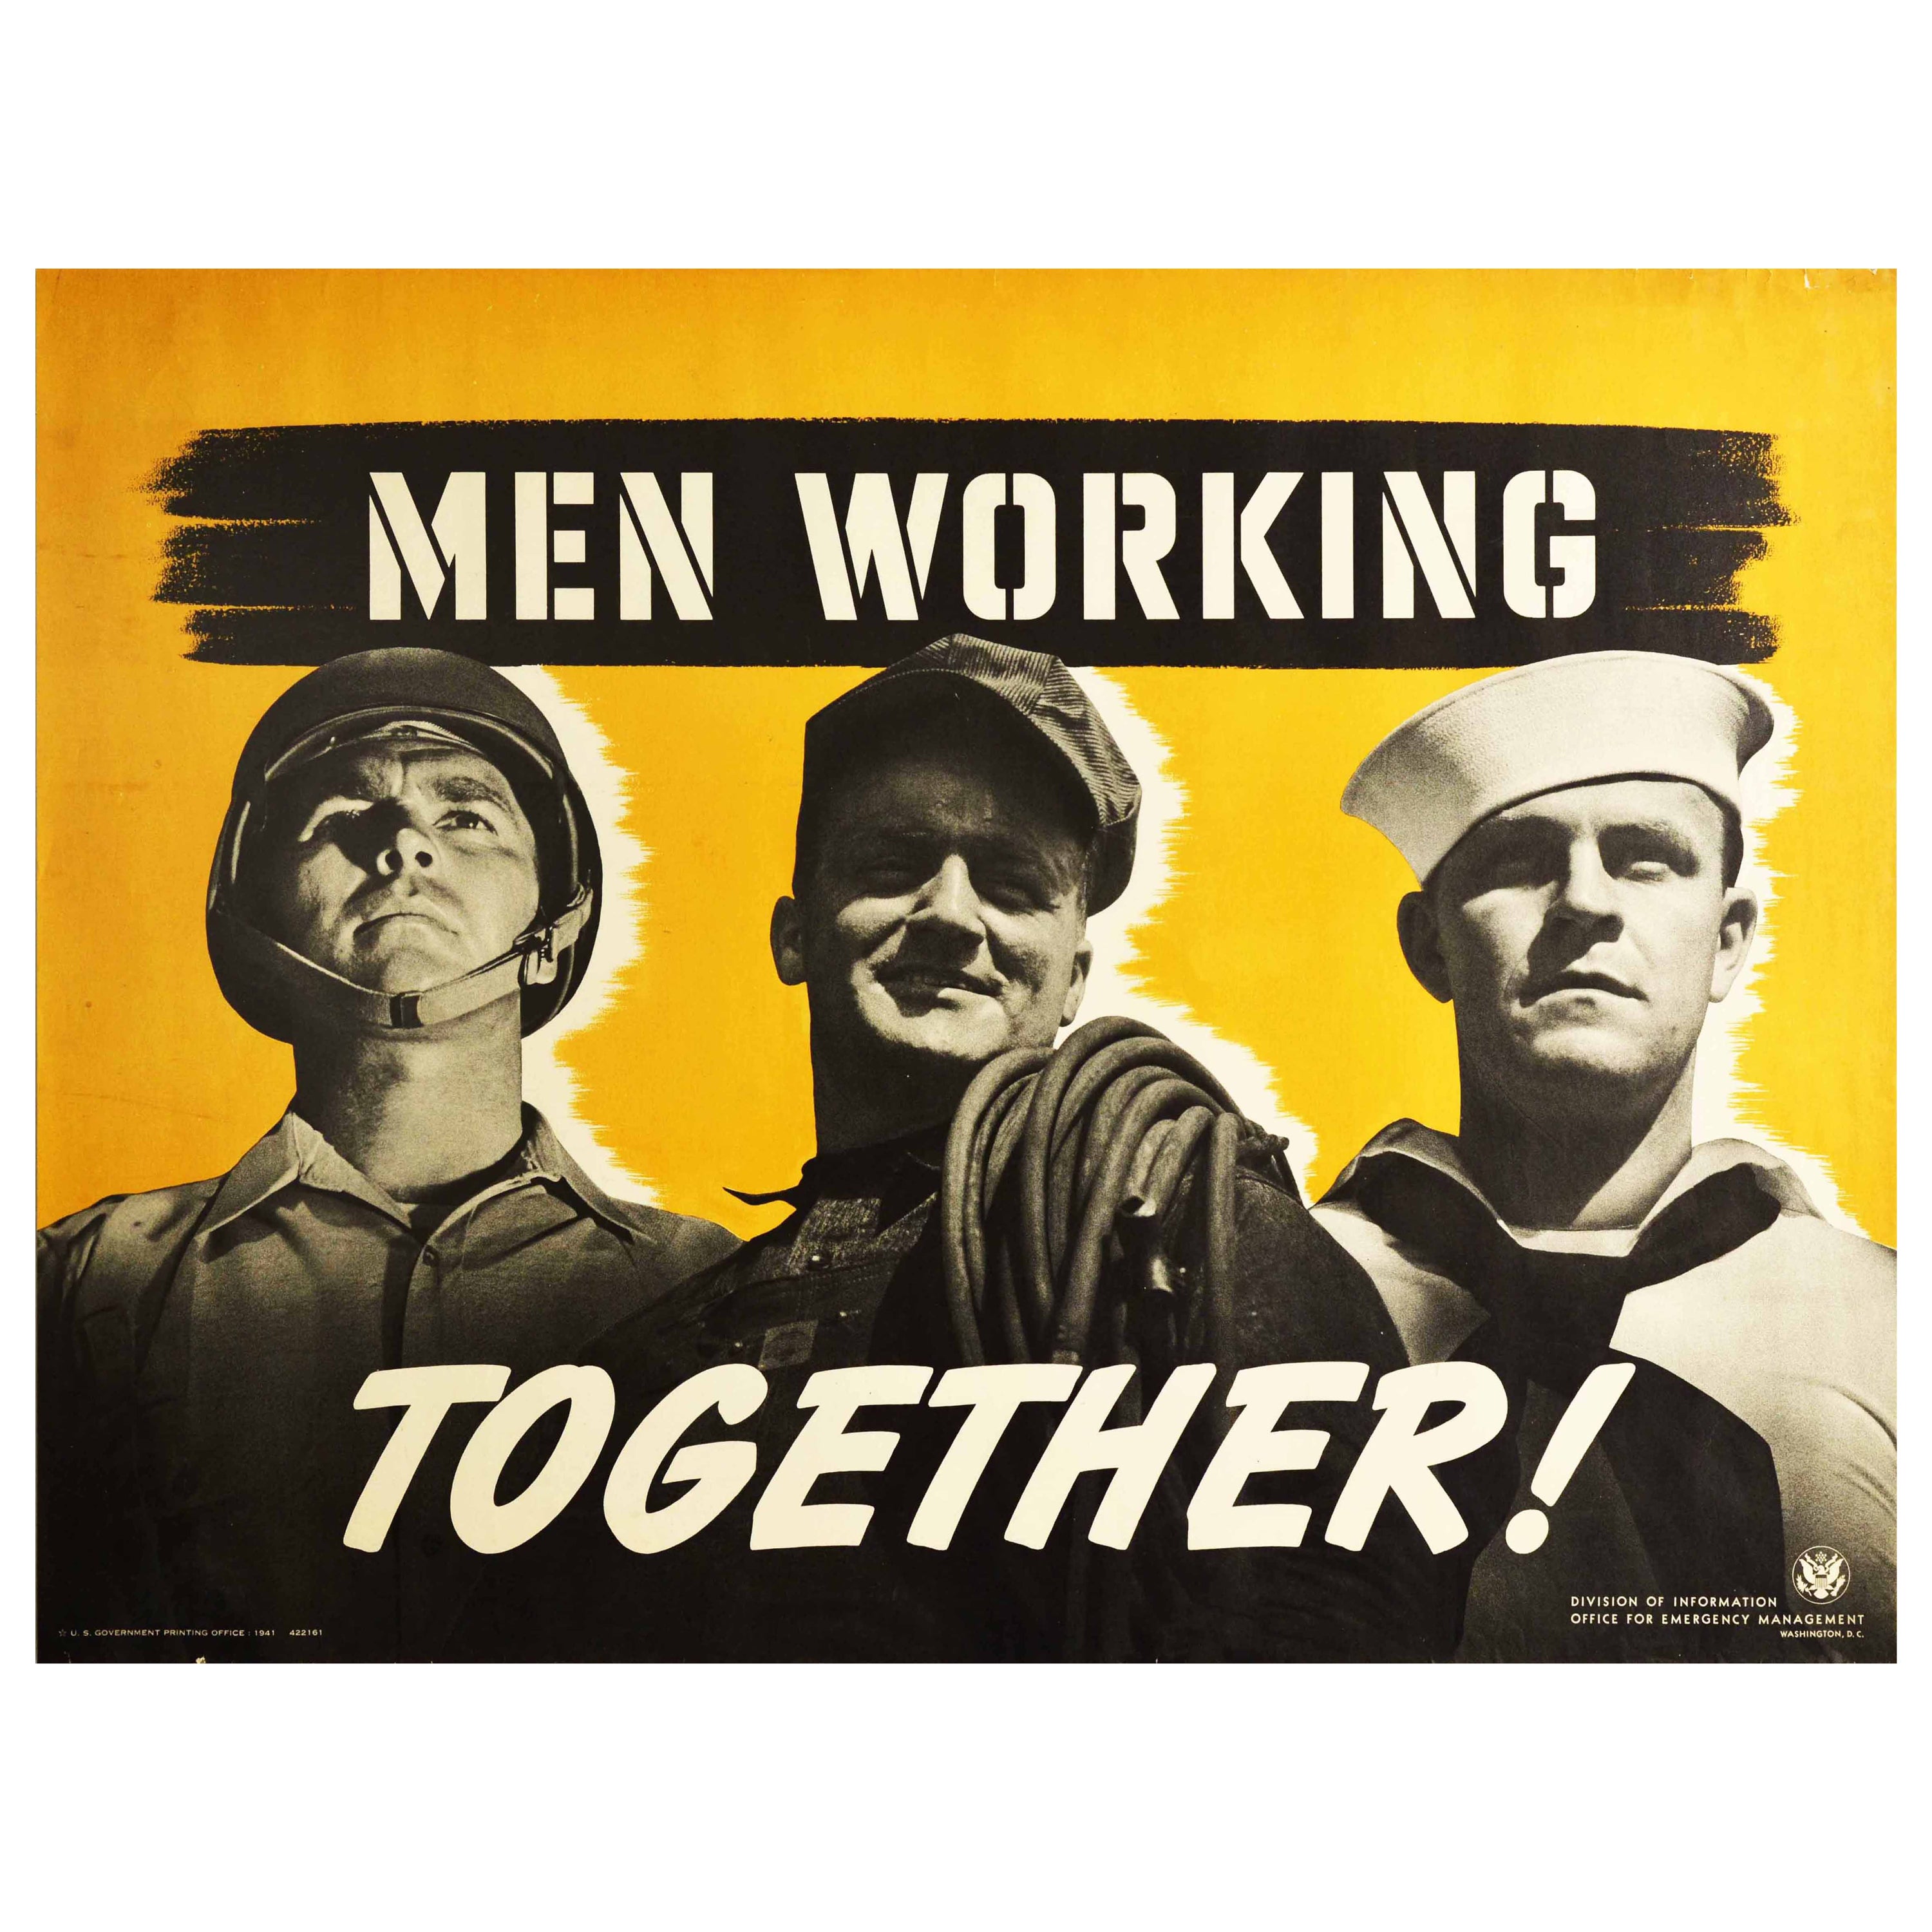 Original Vintage Poster Men Working Together WWII US Army Navy Home Front Worker